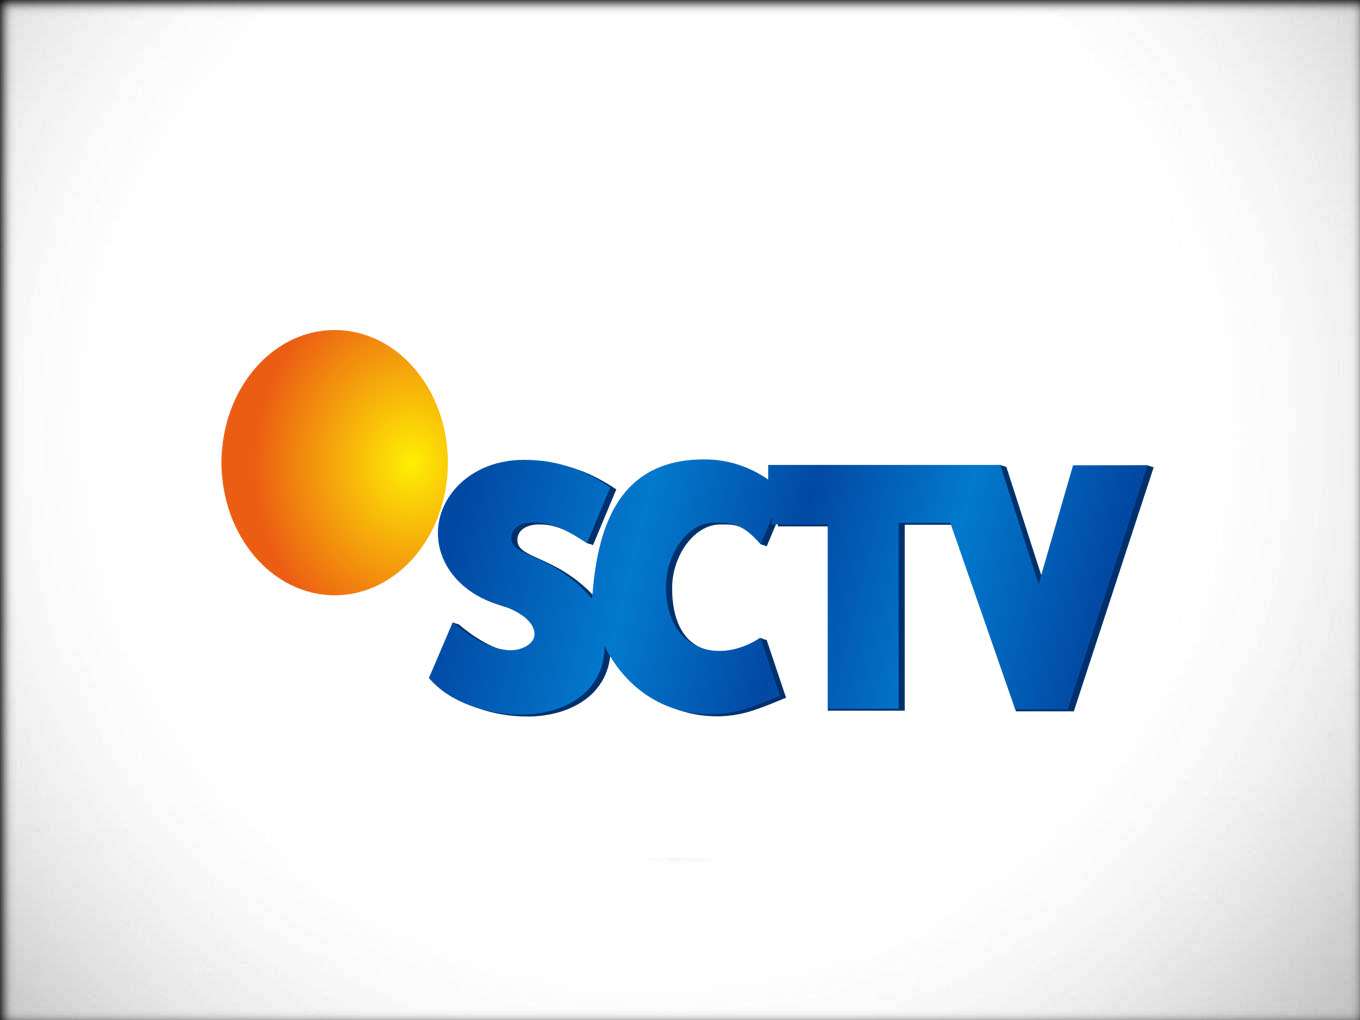 Nonton Tv Sctv Online Live Streaming Hd Gratis